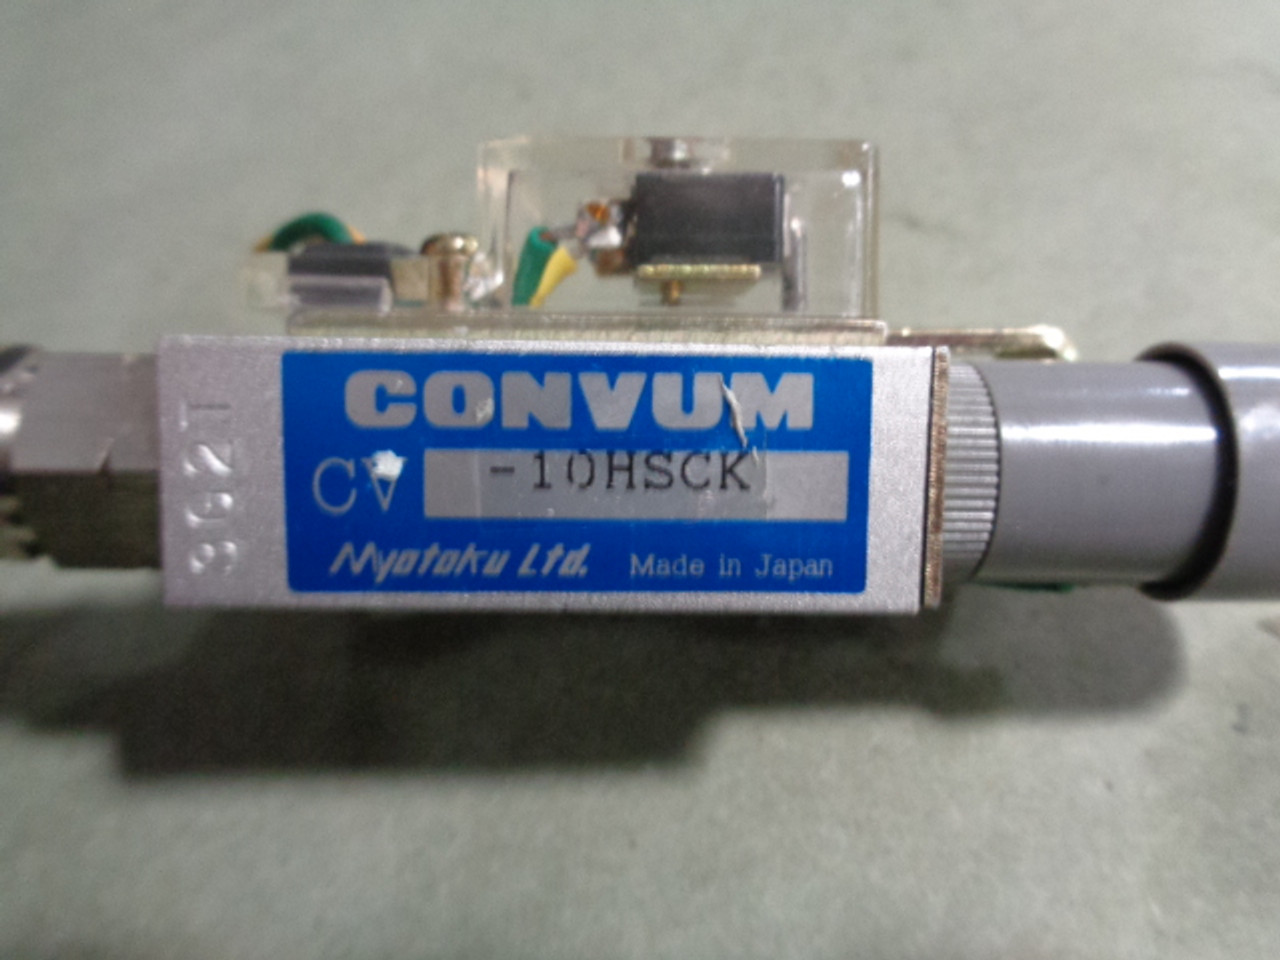 Convum CV-10HSCK Vacuum Generator with Mechanical Switch3